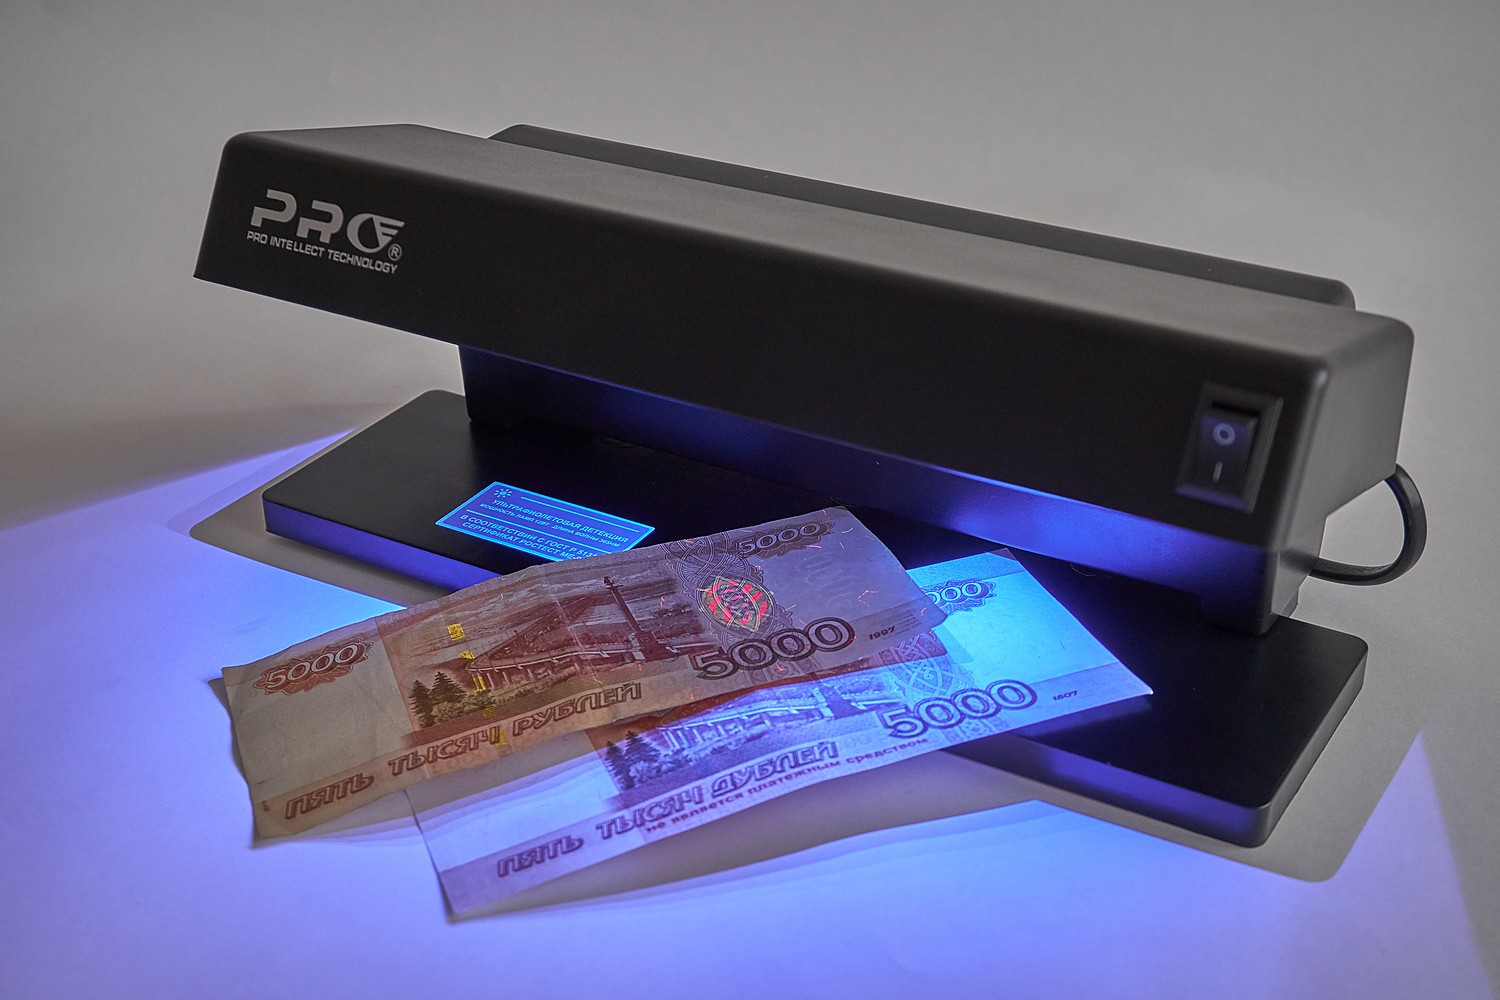 Тест купюр. Детектор банкнот Pro 12lpm. Детектор банкнот Pro 12 led т-06349. Pro детектор банкнот Pro 4 led. "Детектор валют ir-1750".